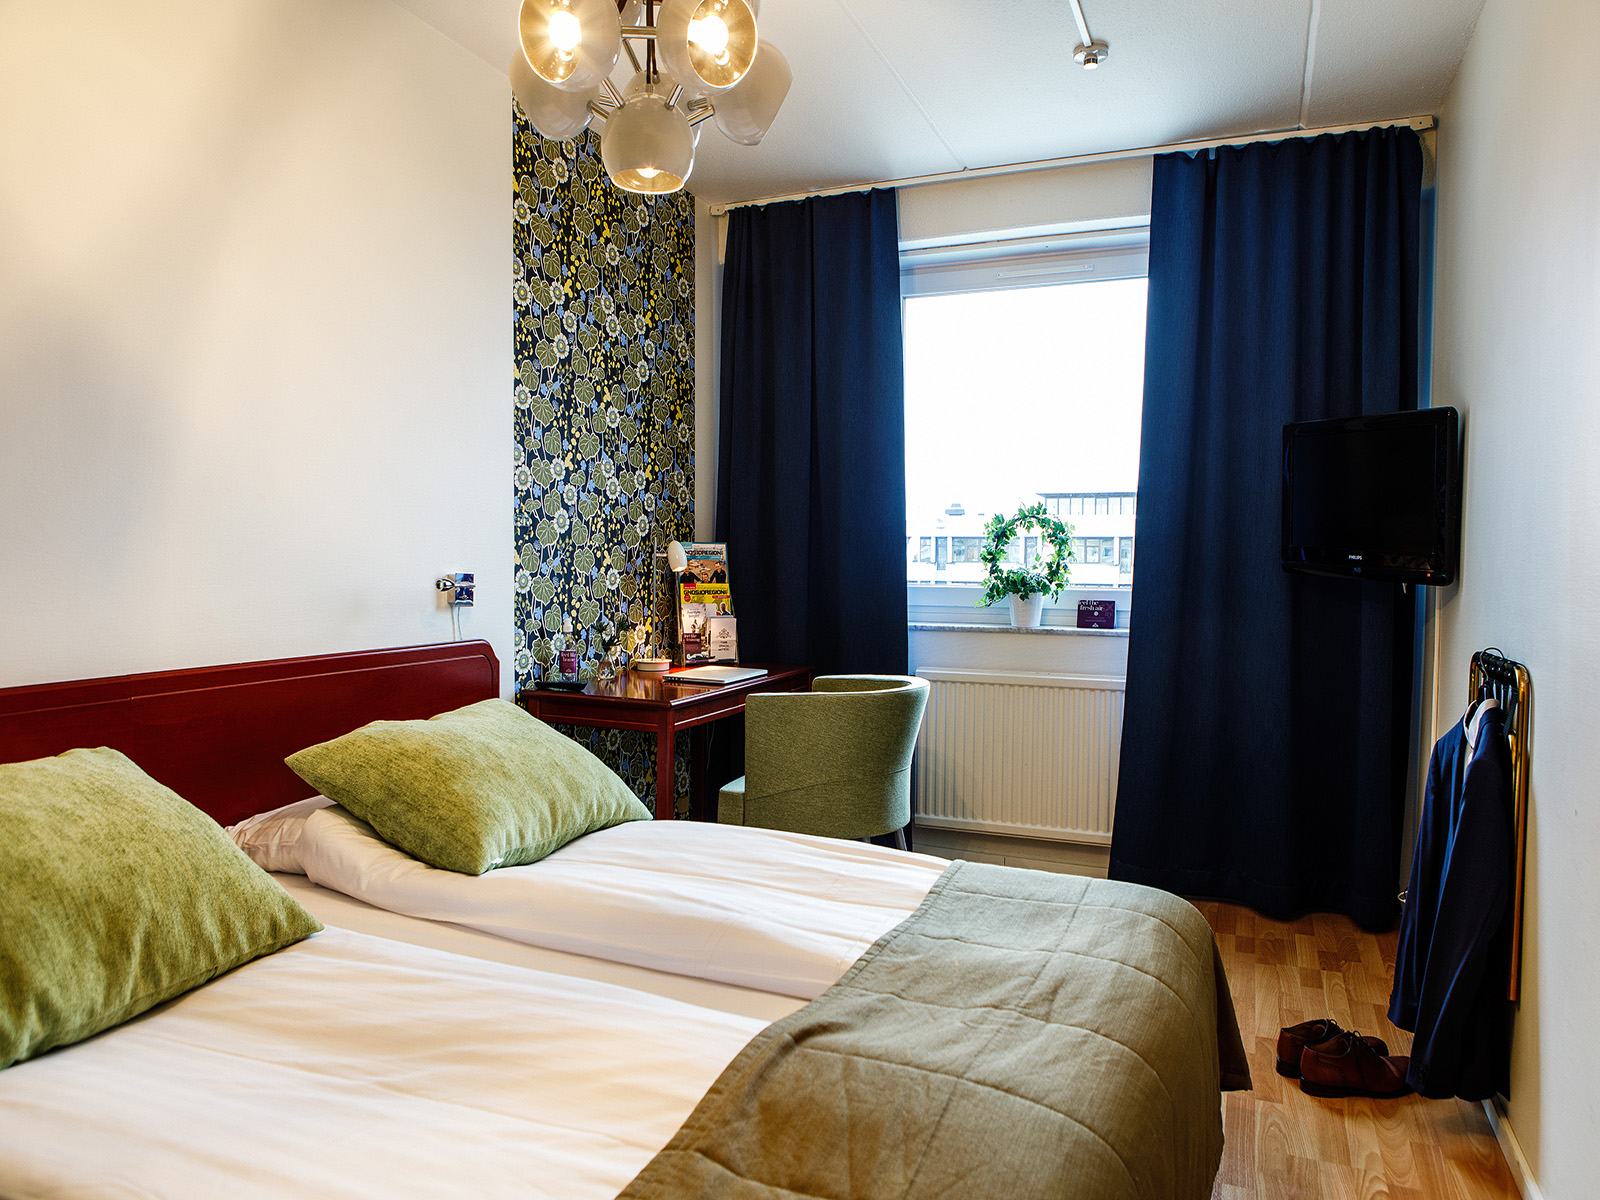 Hotell Nissastigen <br/>81.92 ew <br/> <a href='http://vakantieoplossing.nl/outpage/?id=636c60231daca4cd6595b79769bd0375' target='_blank'>View Details</a>